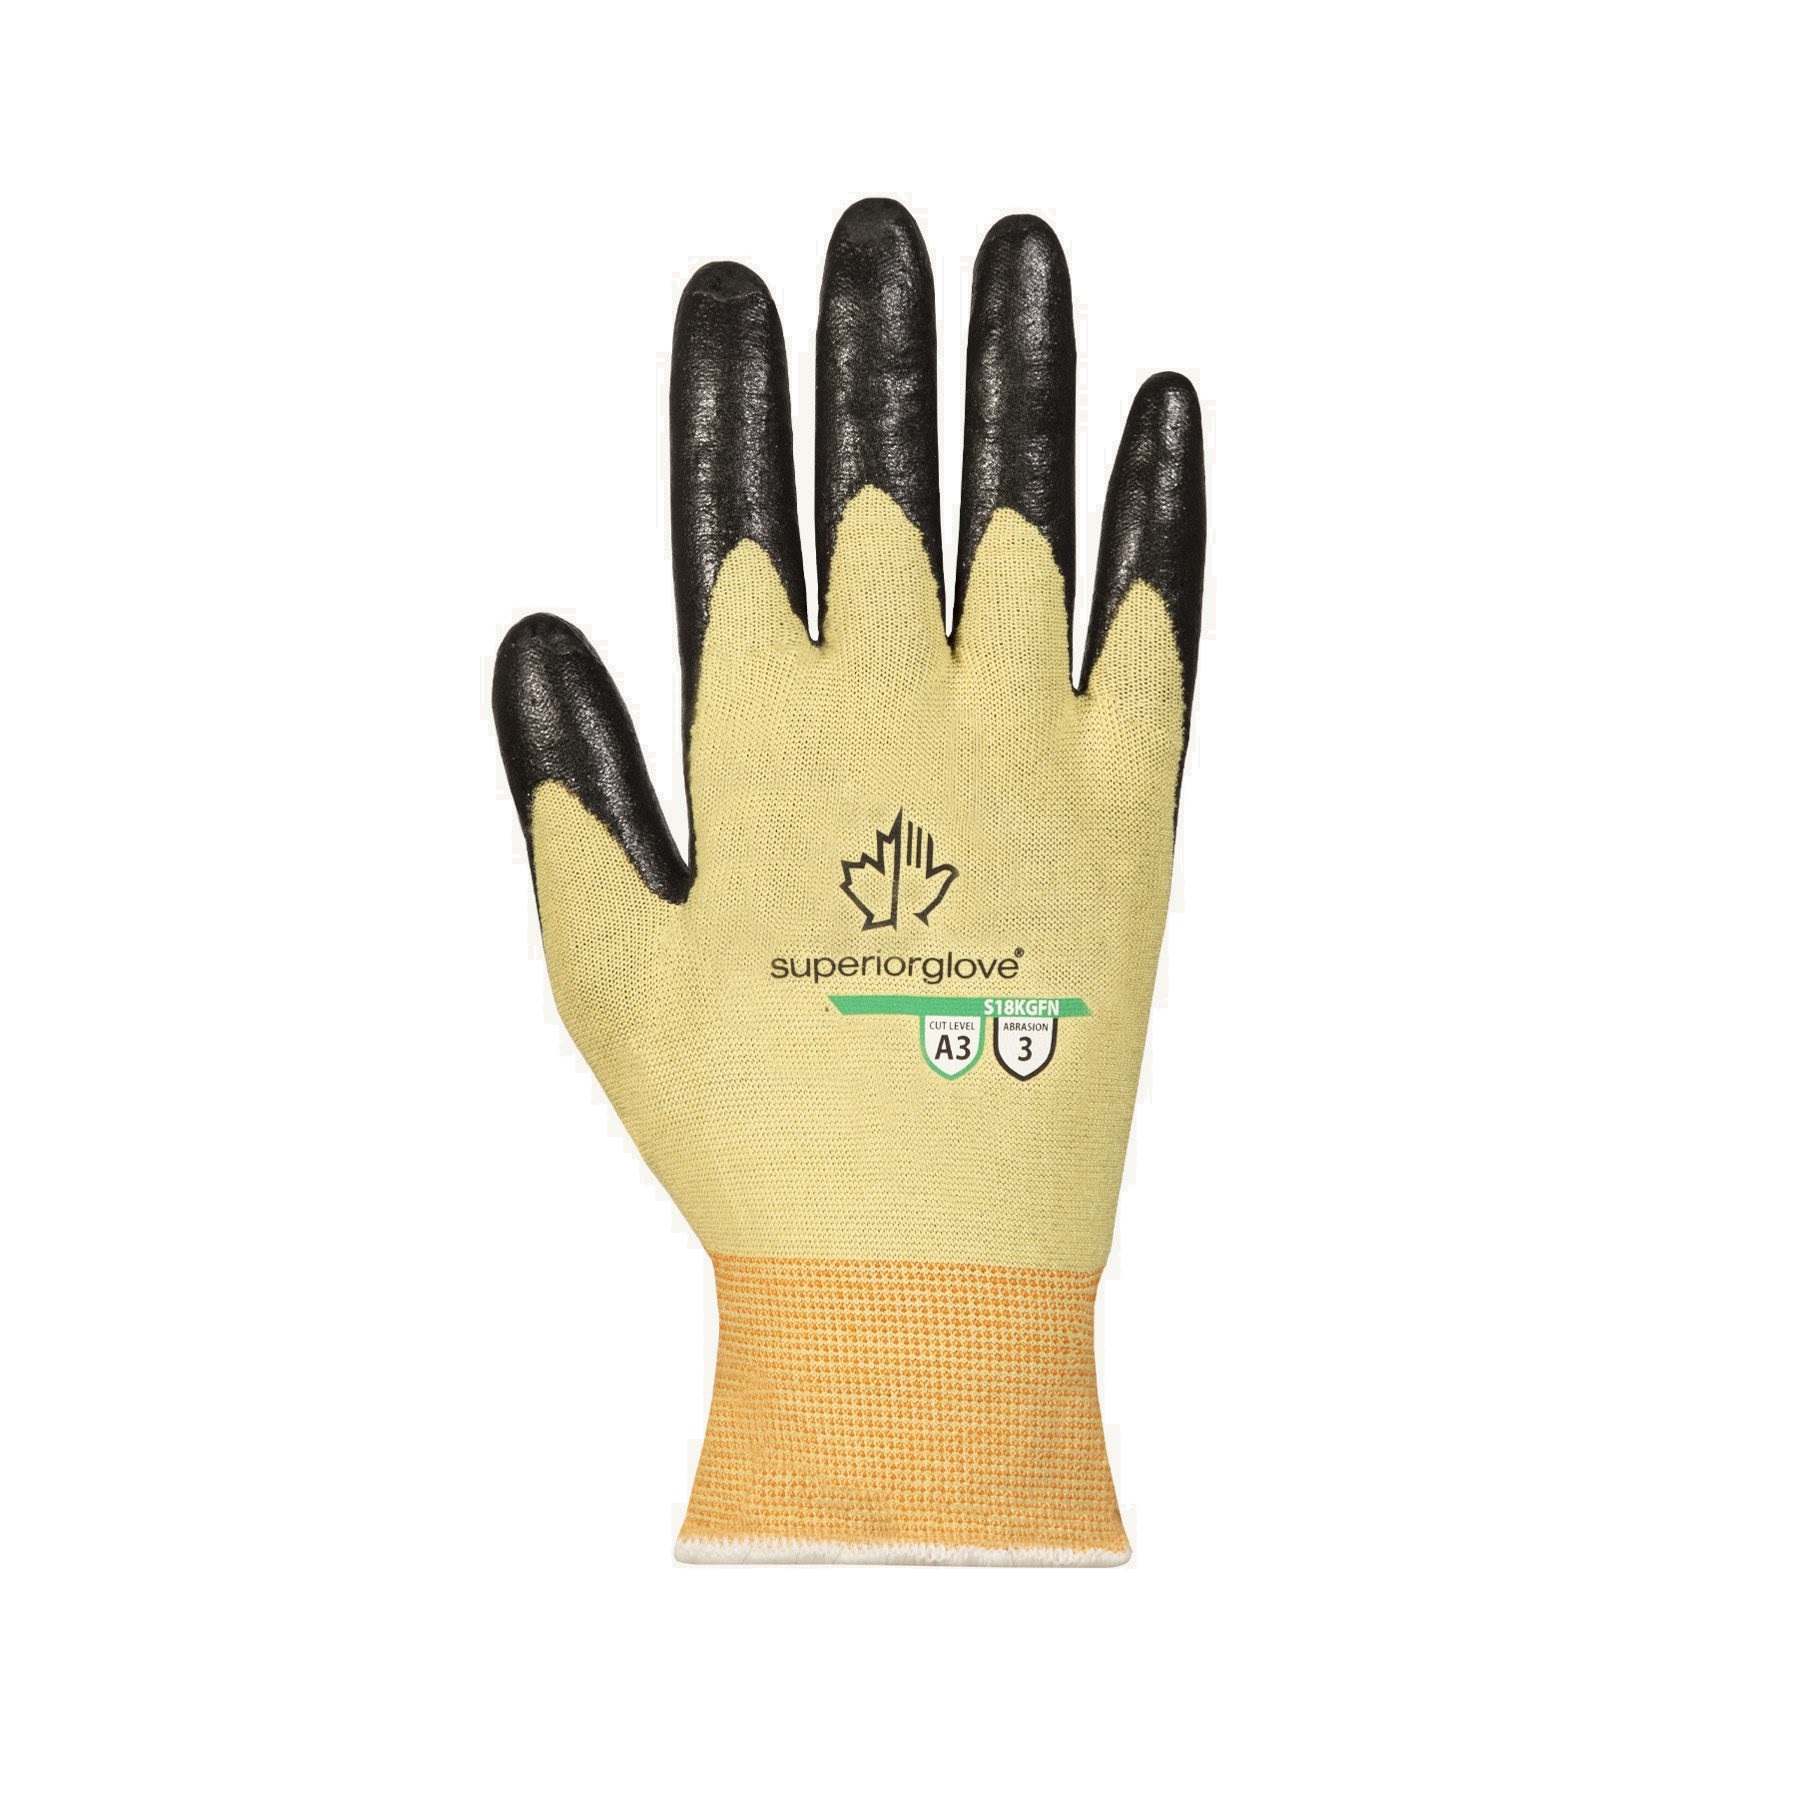 DEXTERITY 18G KEVLAR NITRILE PALM COATED - Cut Resistant Gloves